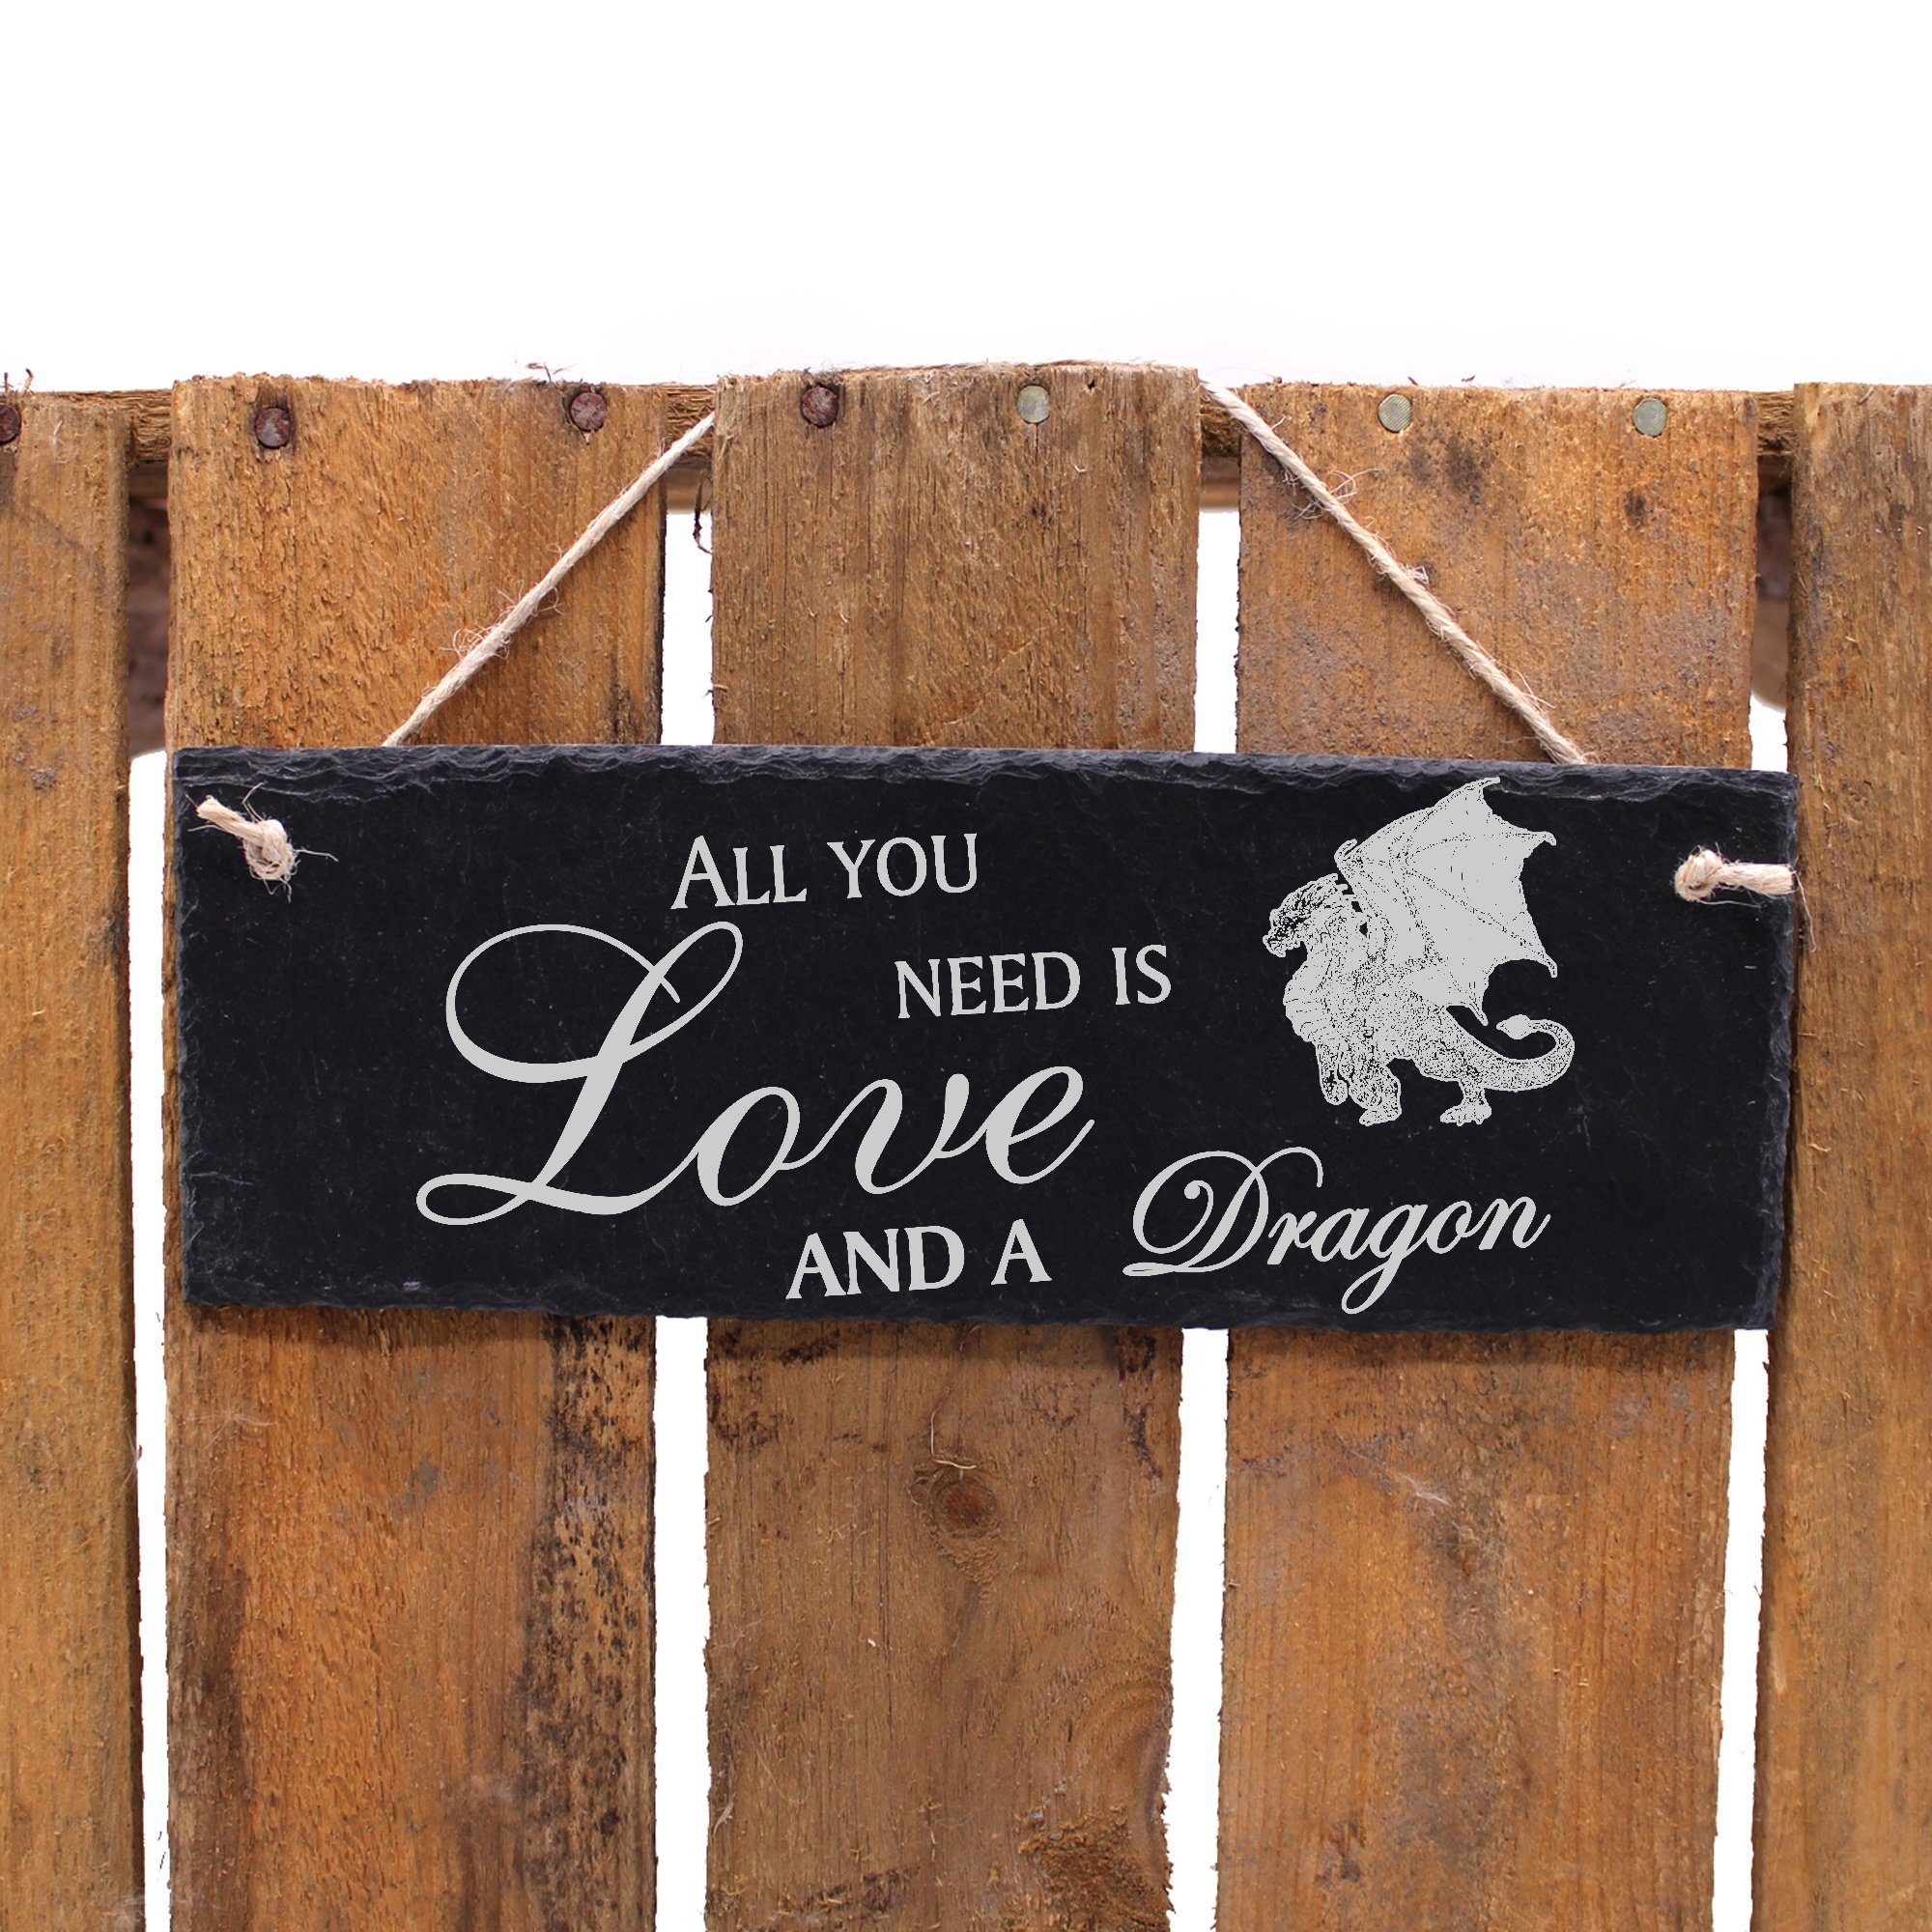 Love Dekolando is Dragon and Hängedekoration need Drache 22x8cm All a you